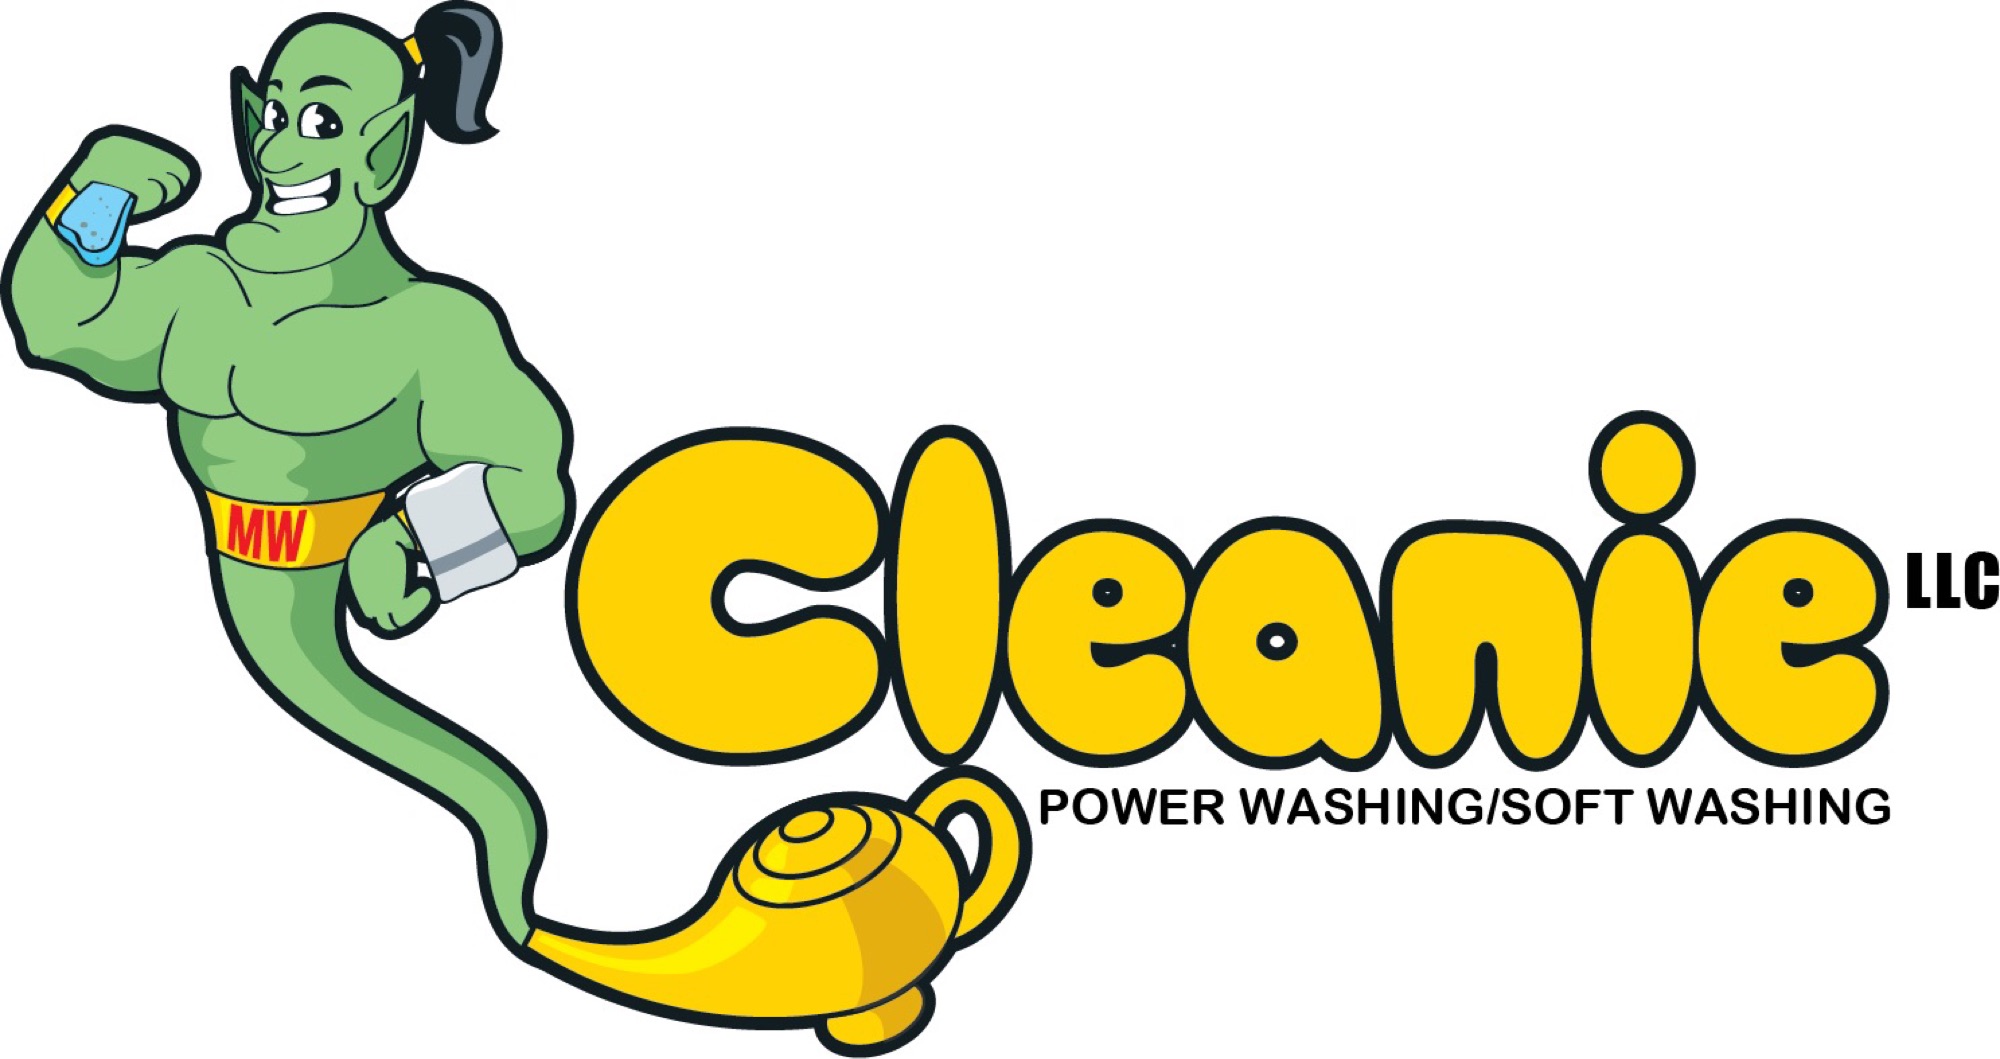 Cleanie LLC Logo